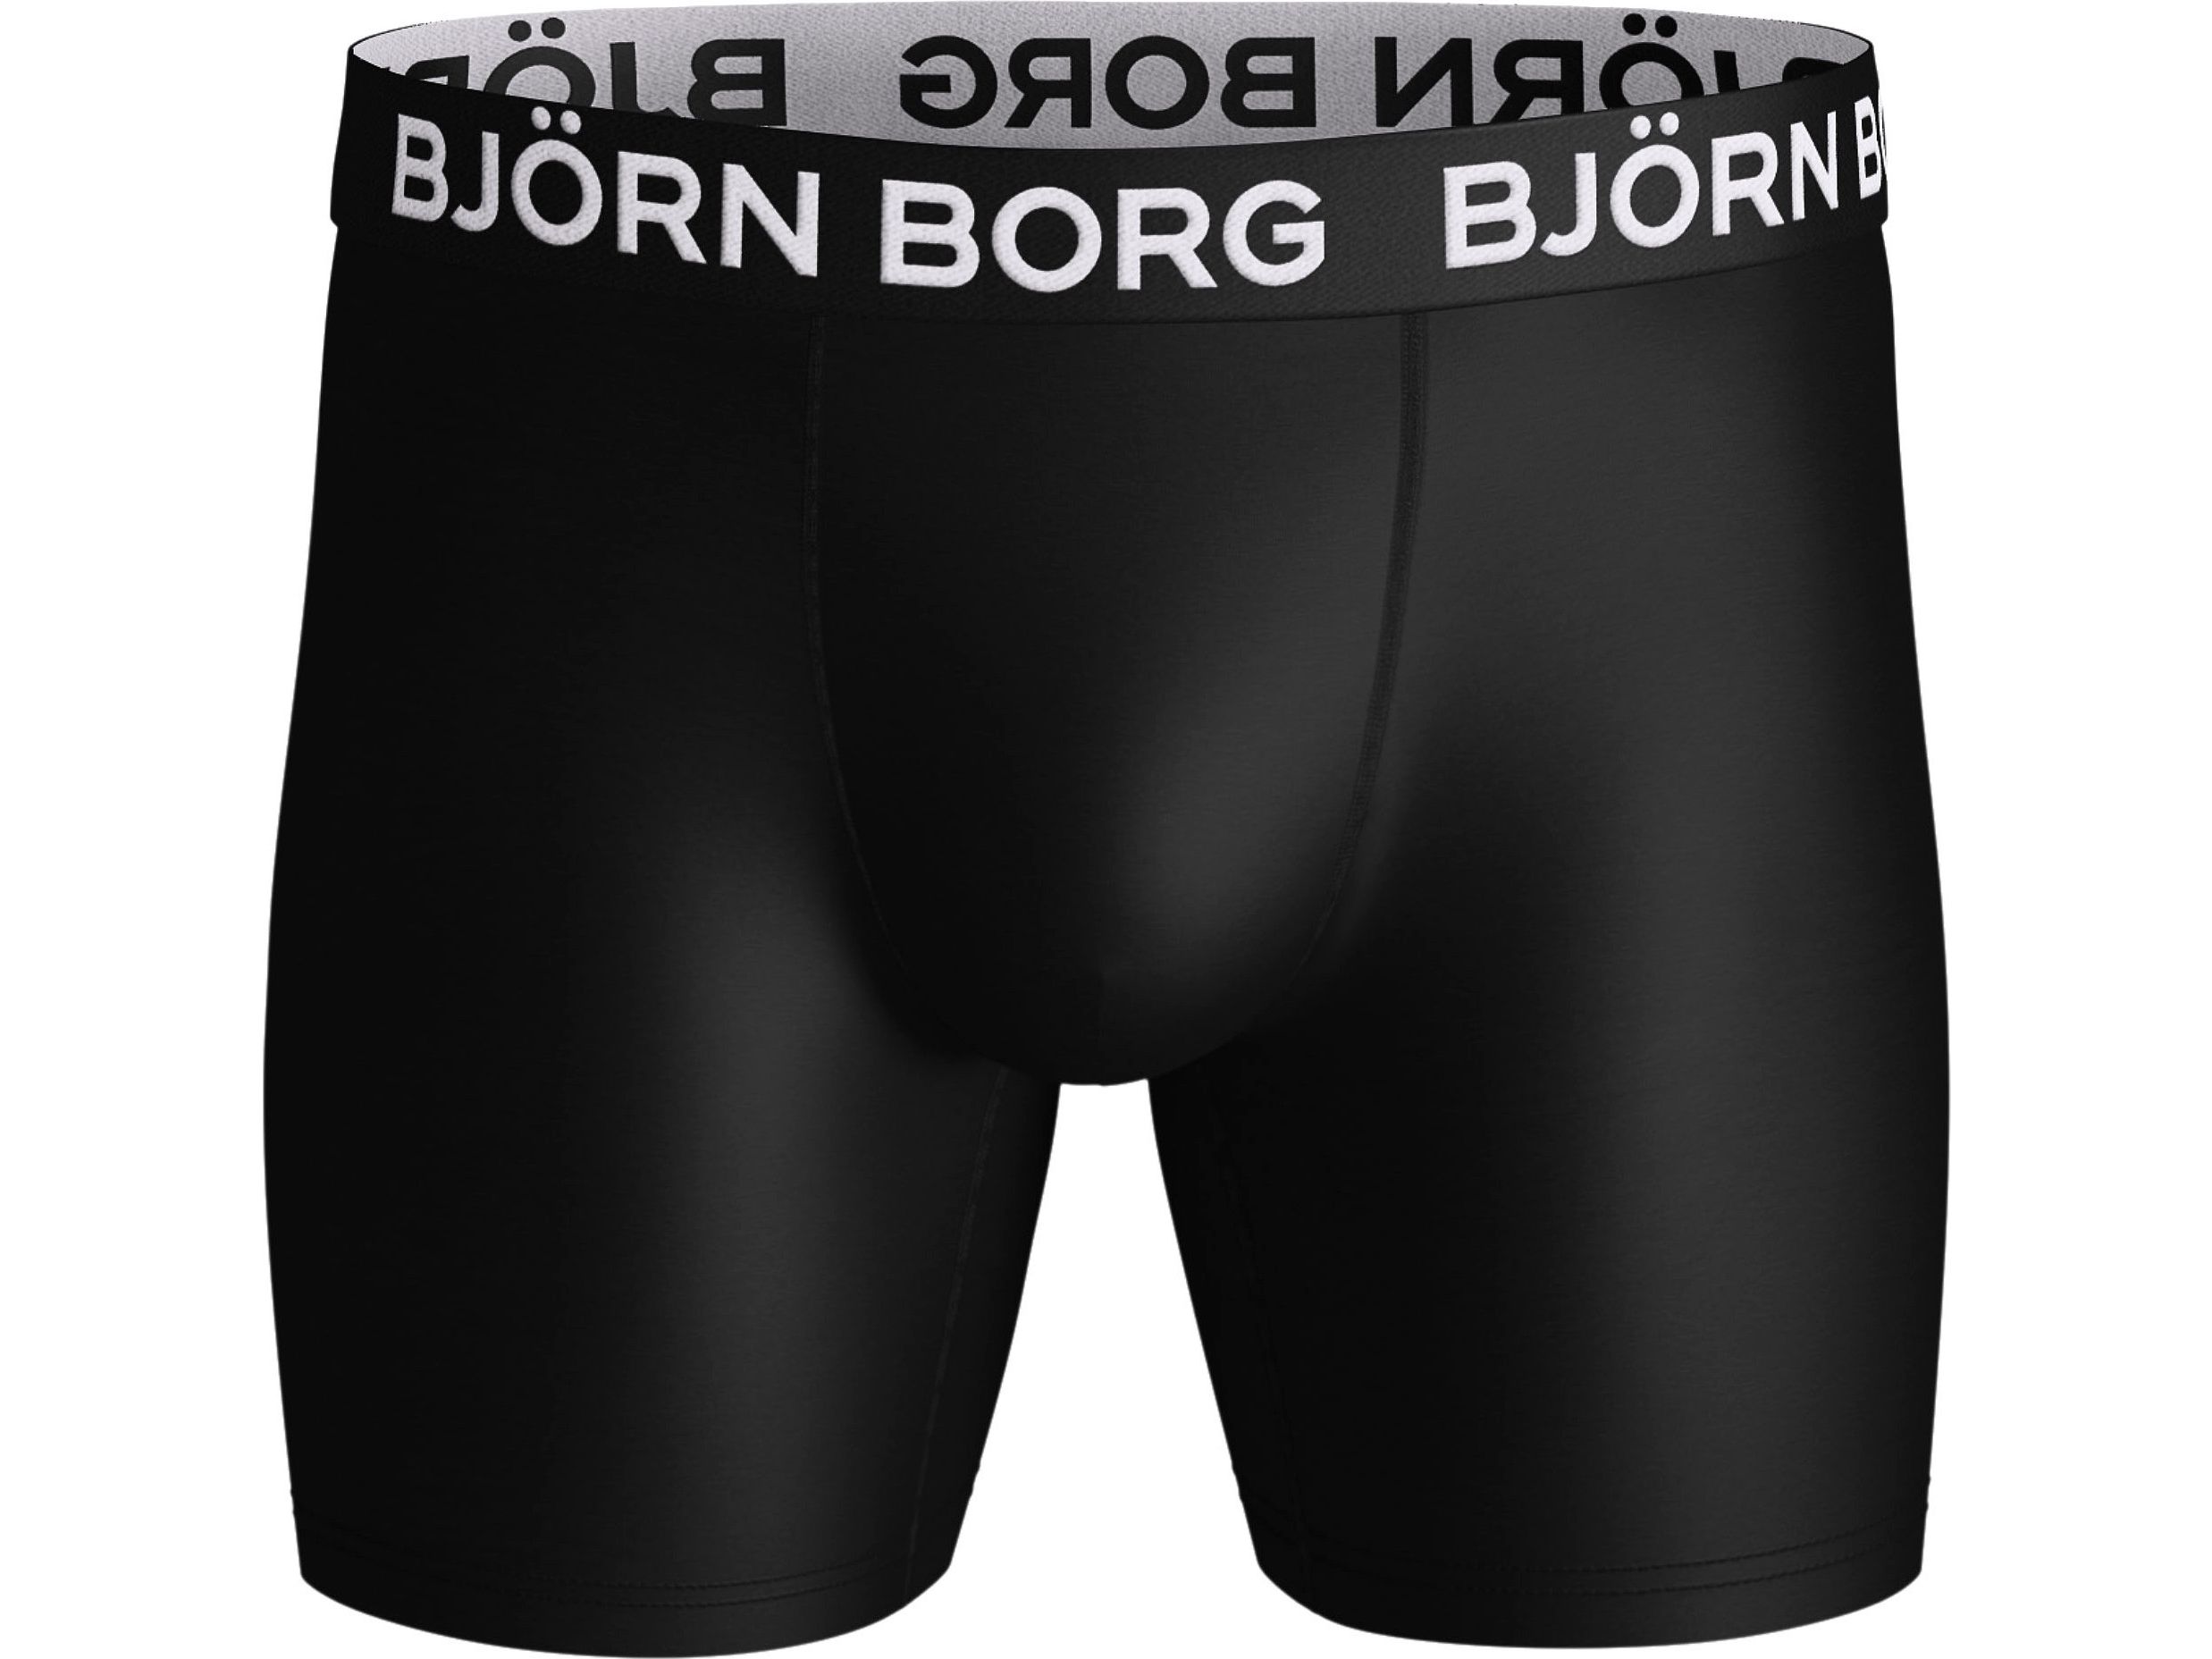 5x-bokserki-bjorn-borg-performance-meskie